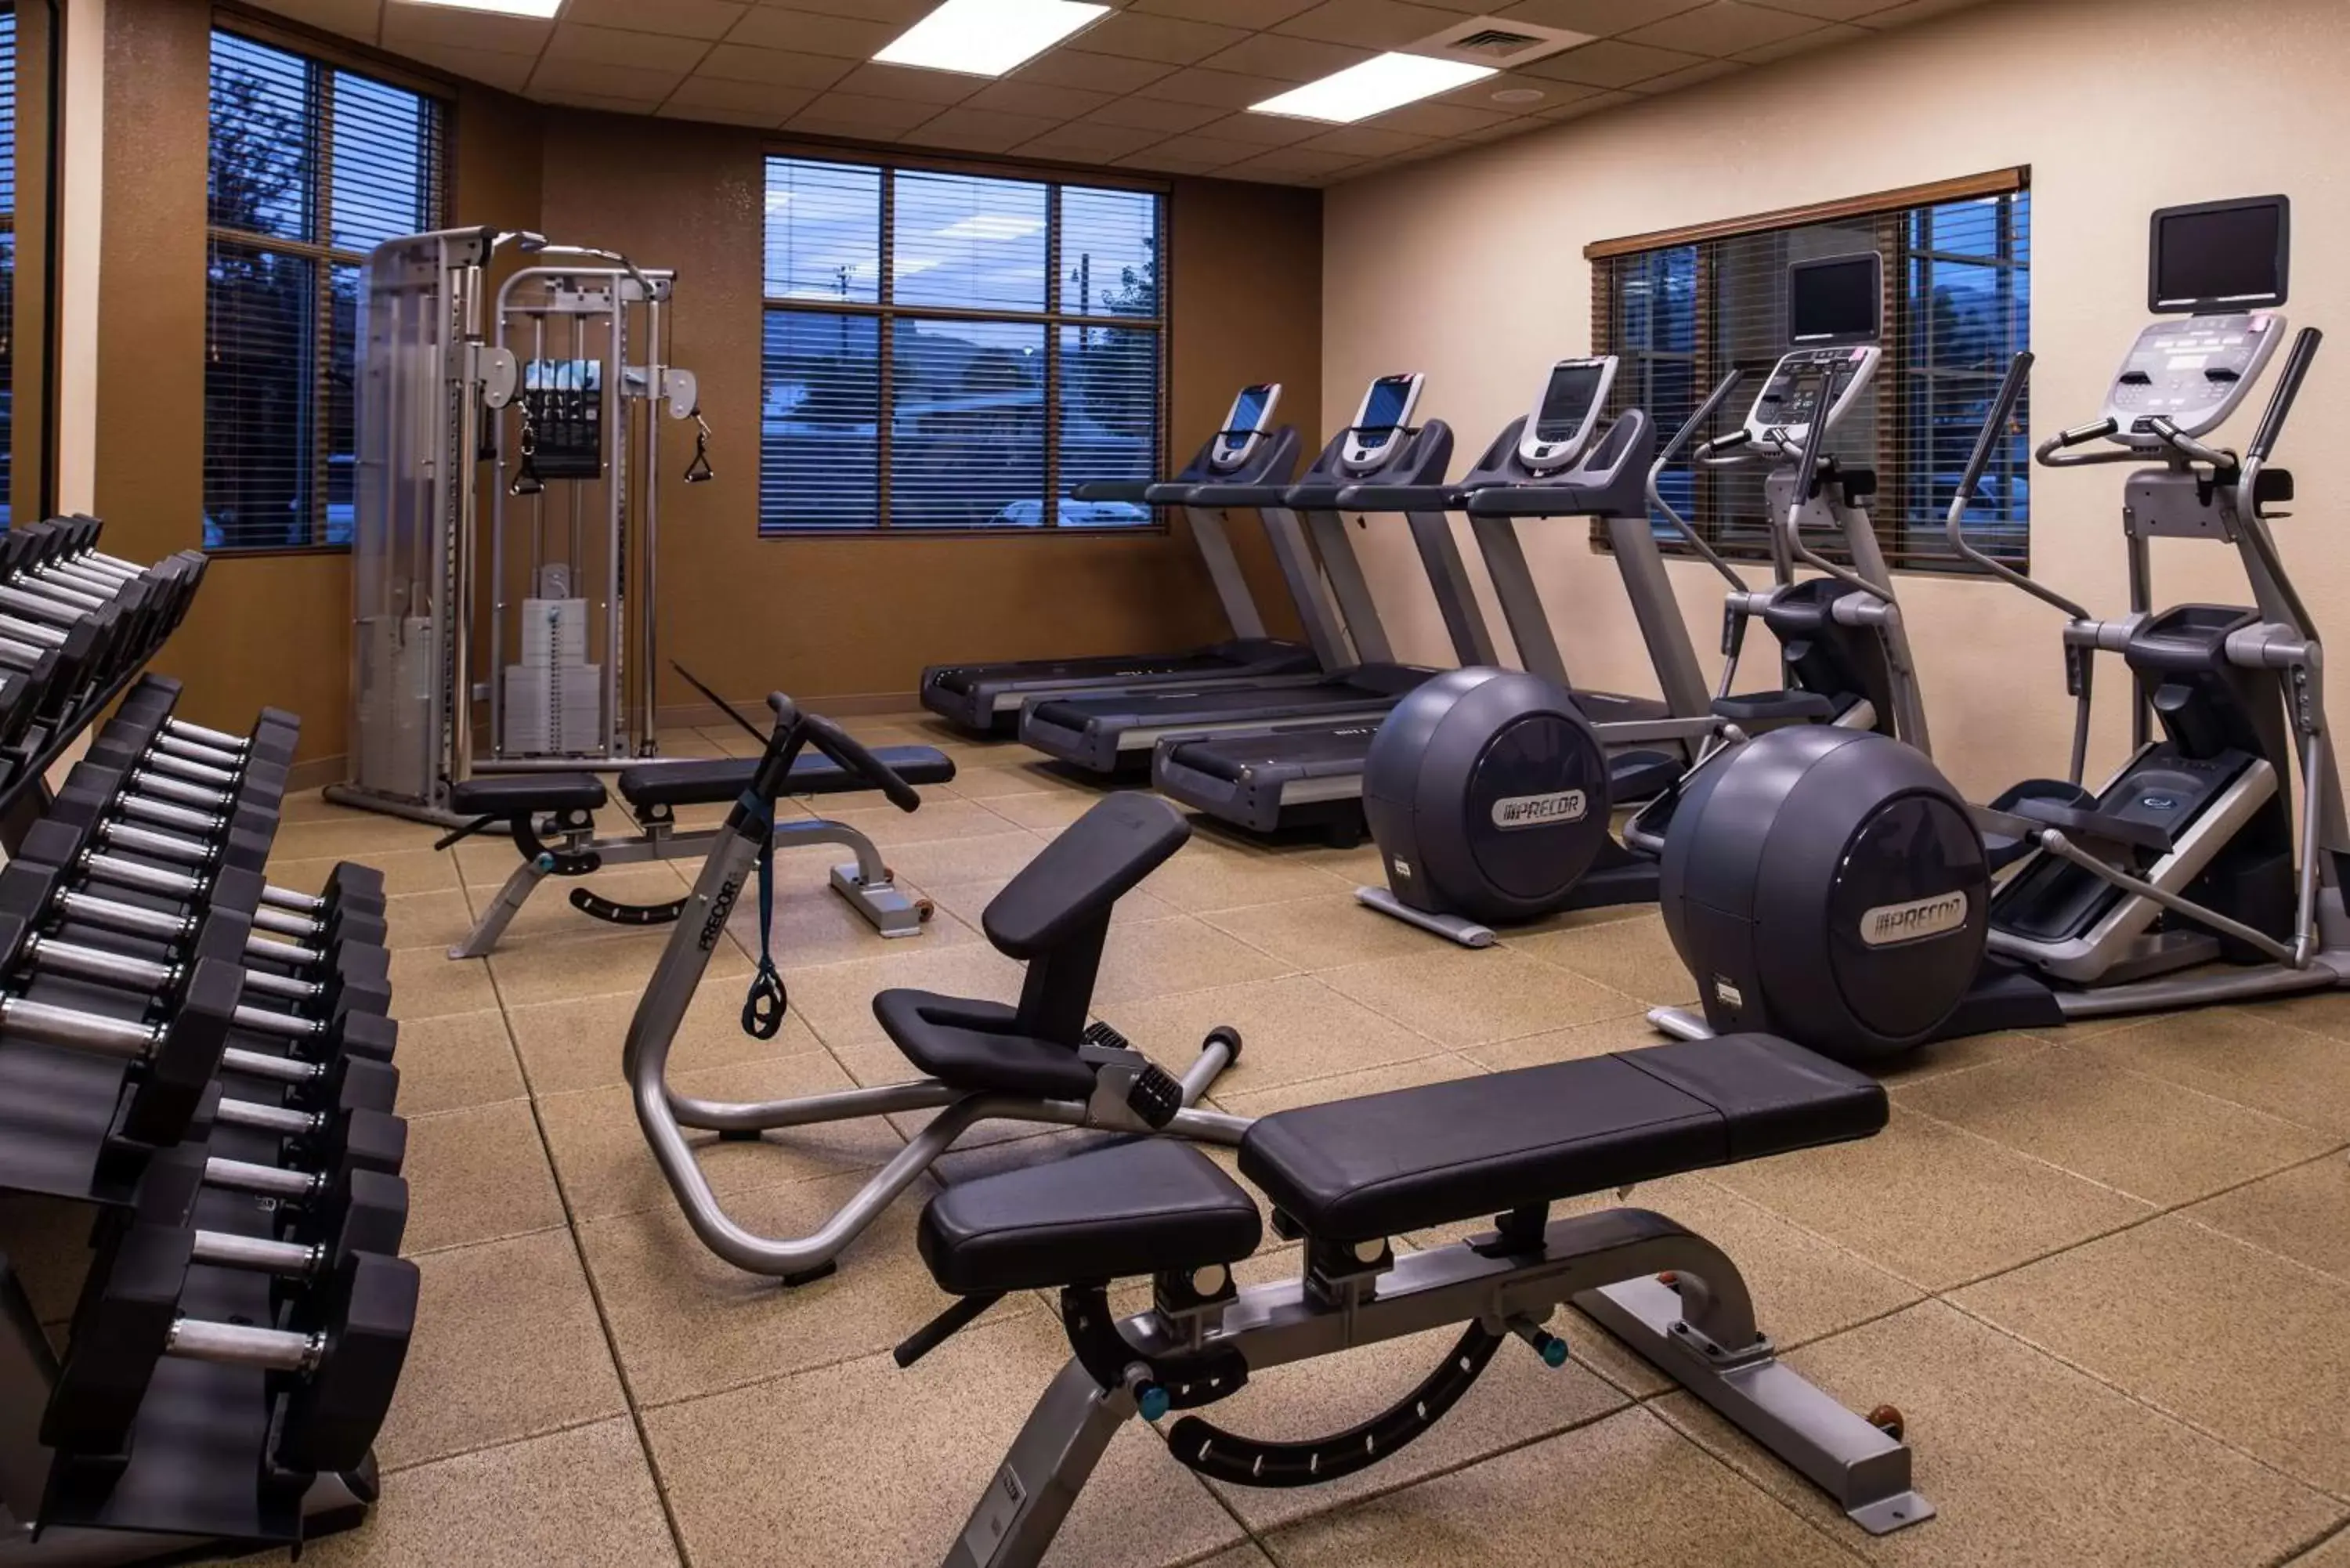 Fitness centre/facilities, Fitness Center/Facilities in Hilton Garden Inn Salt Lake City Downtown